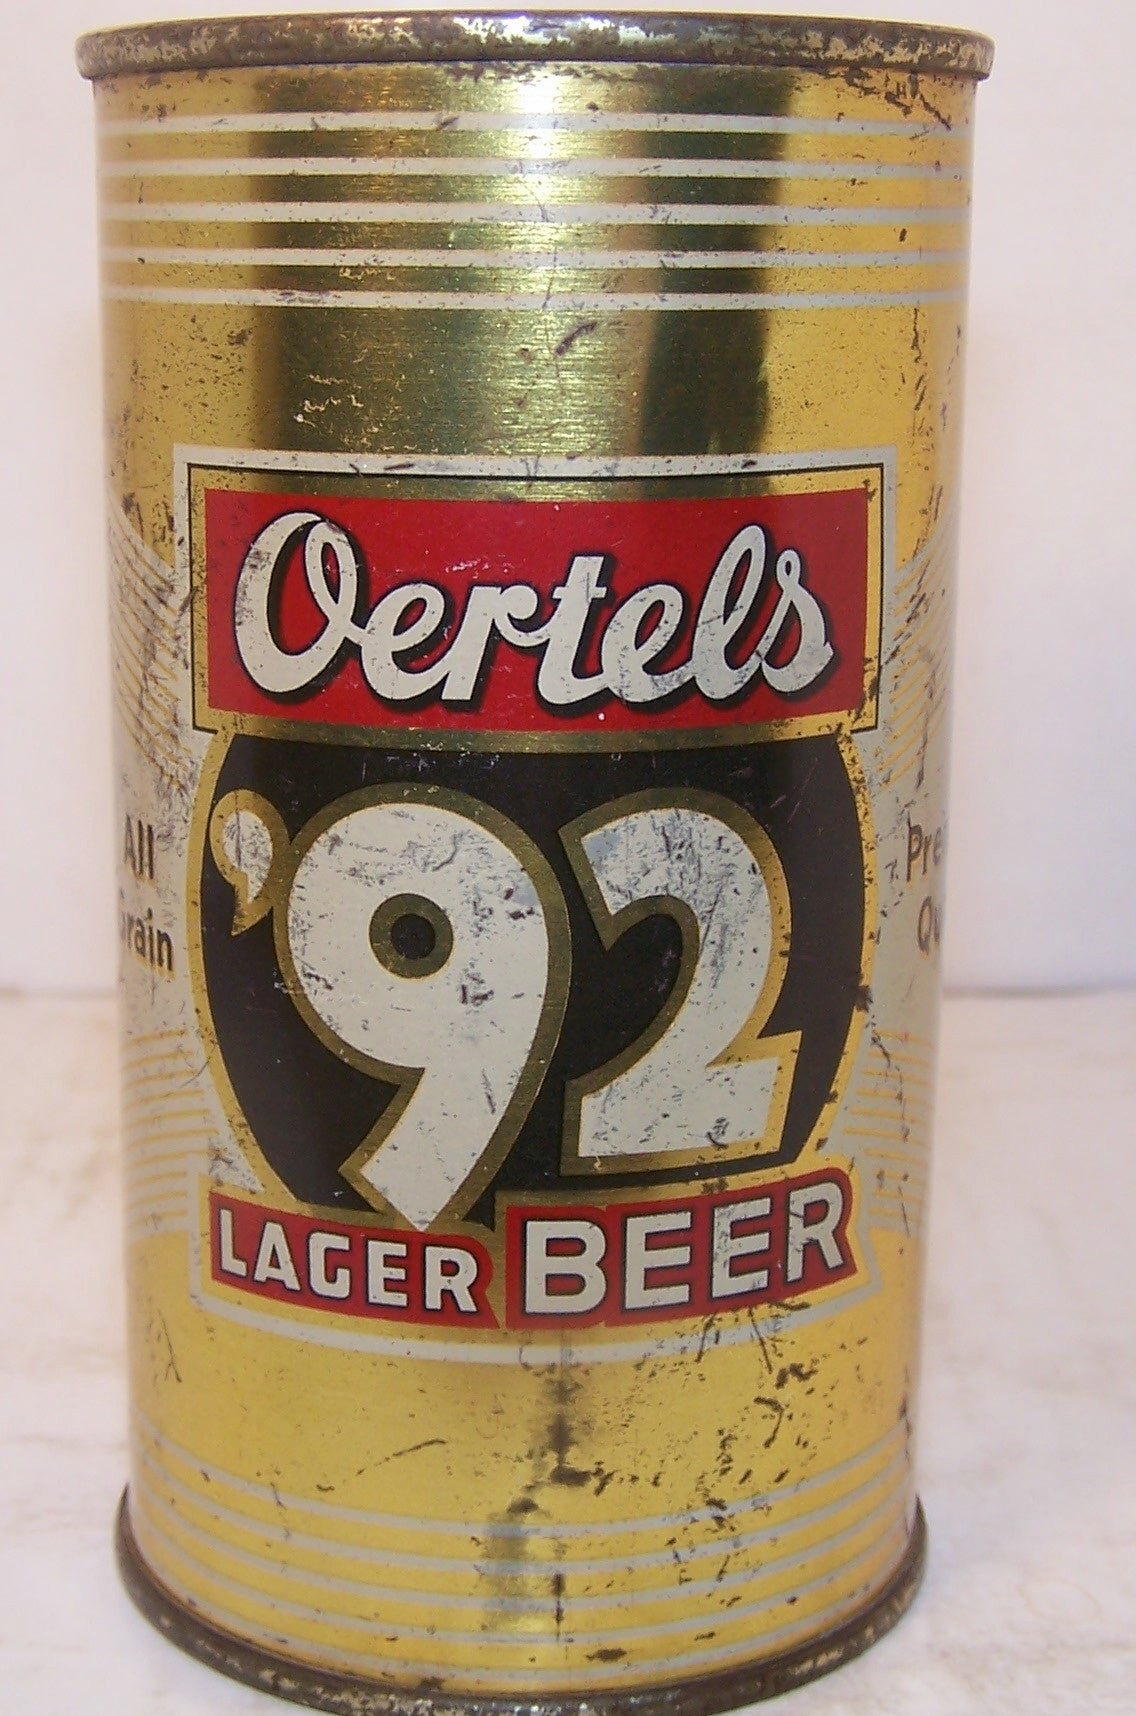 Oertel's 92 Lager Beer, USBC 104-2, Grade 1-/2+ Sold on 3/18/15